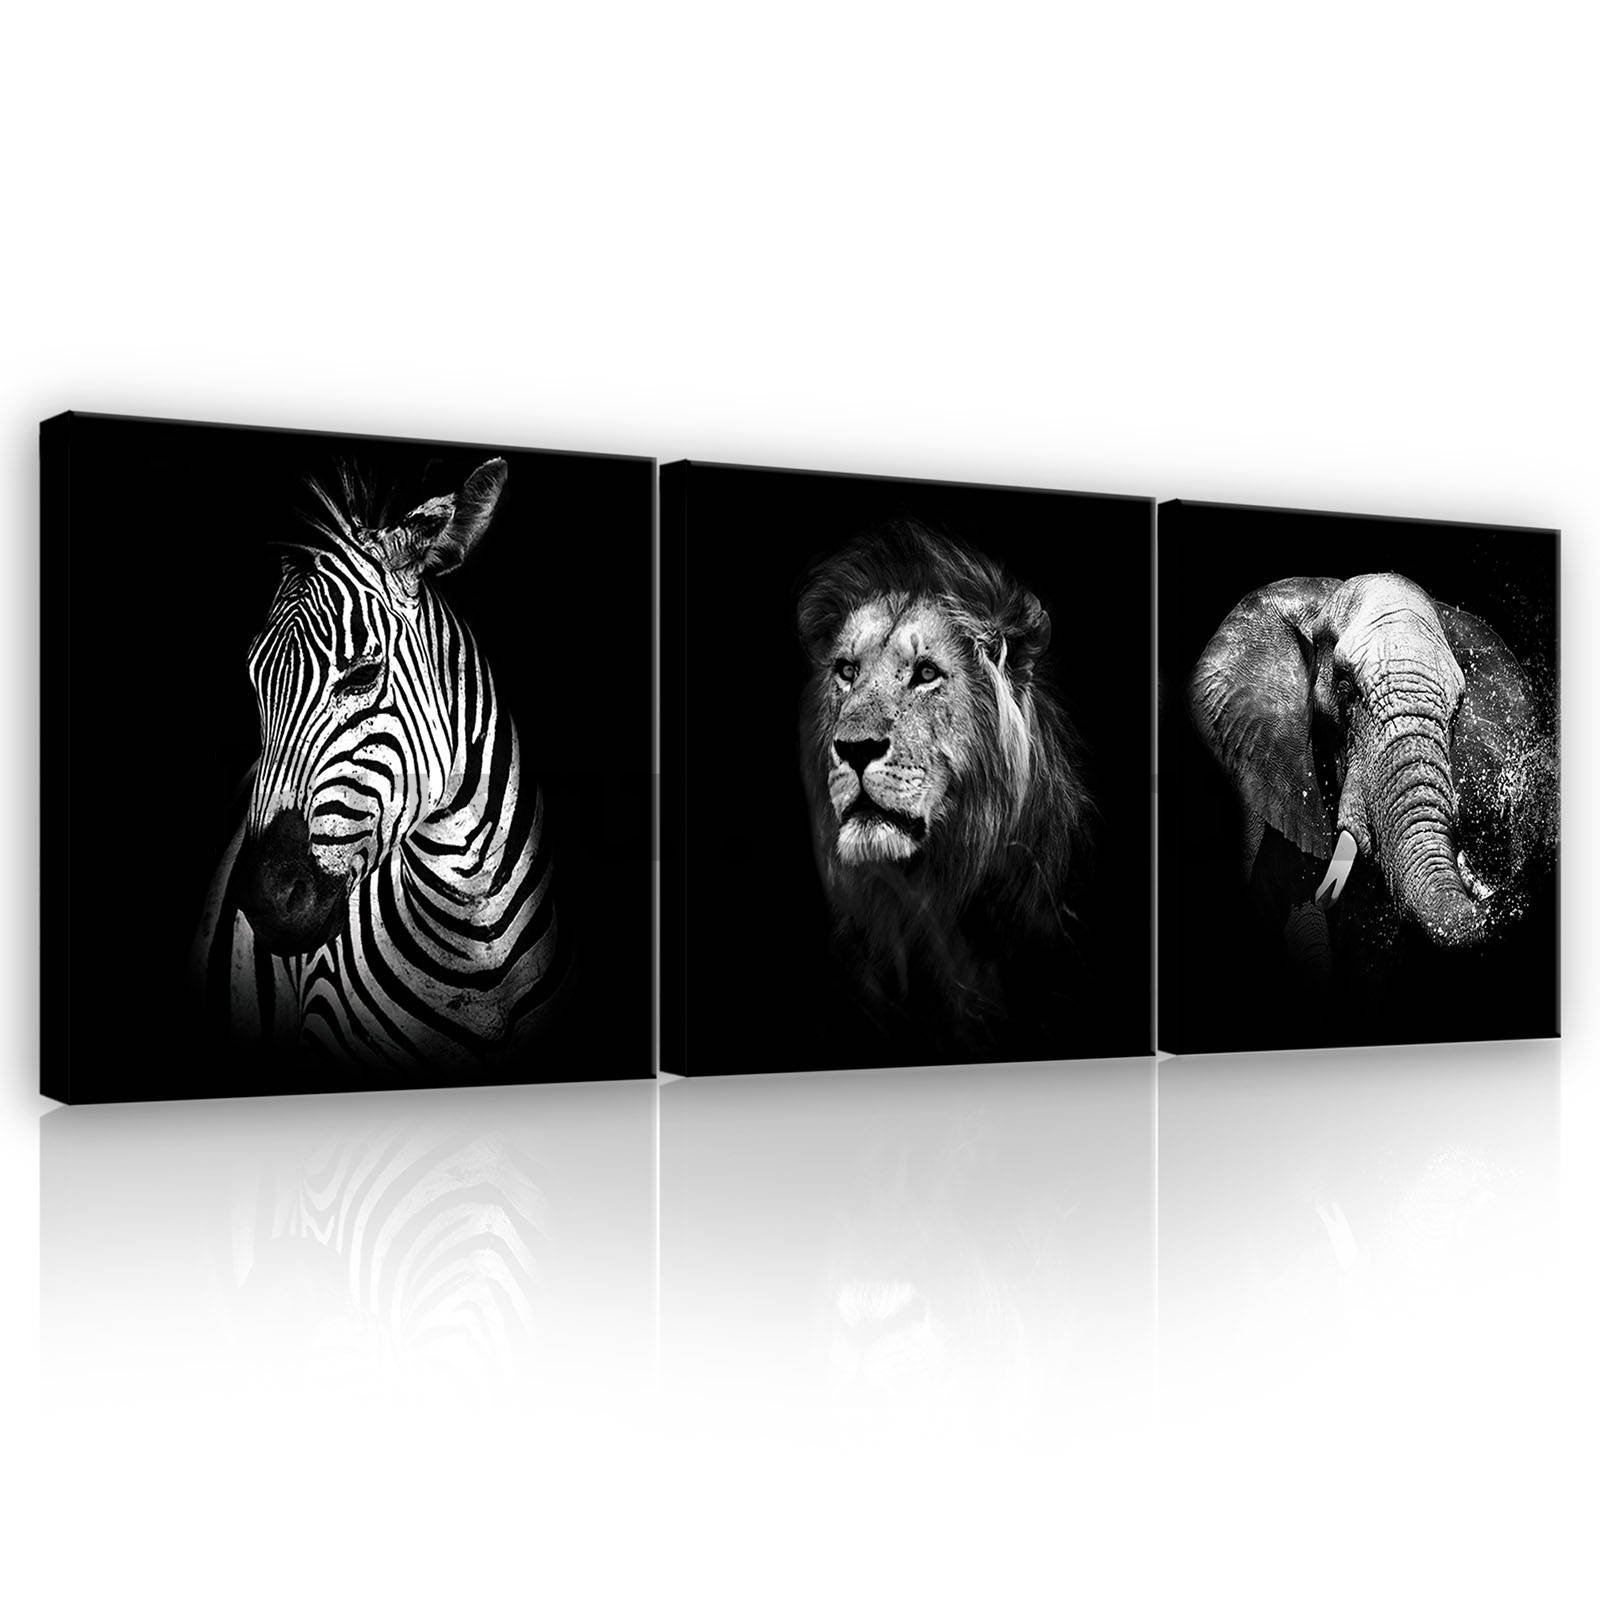 Painting on canvas: Black and white animals (1) - set 3pcs 25x25cm